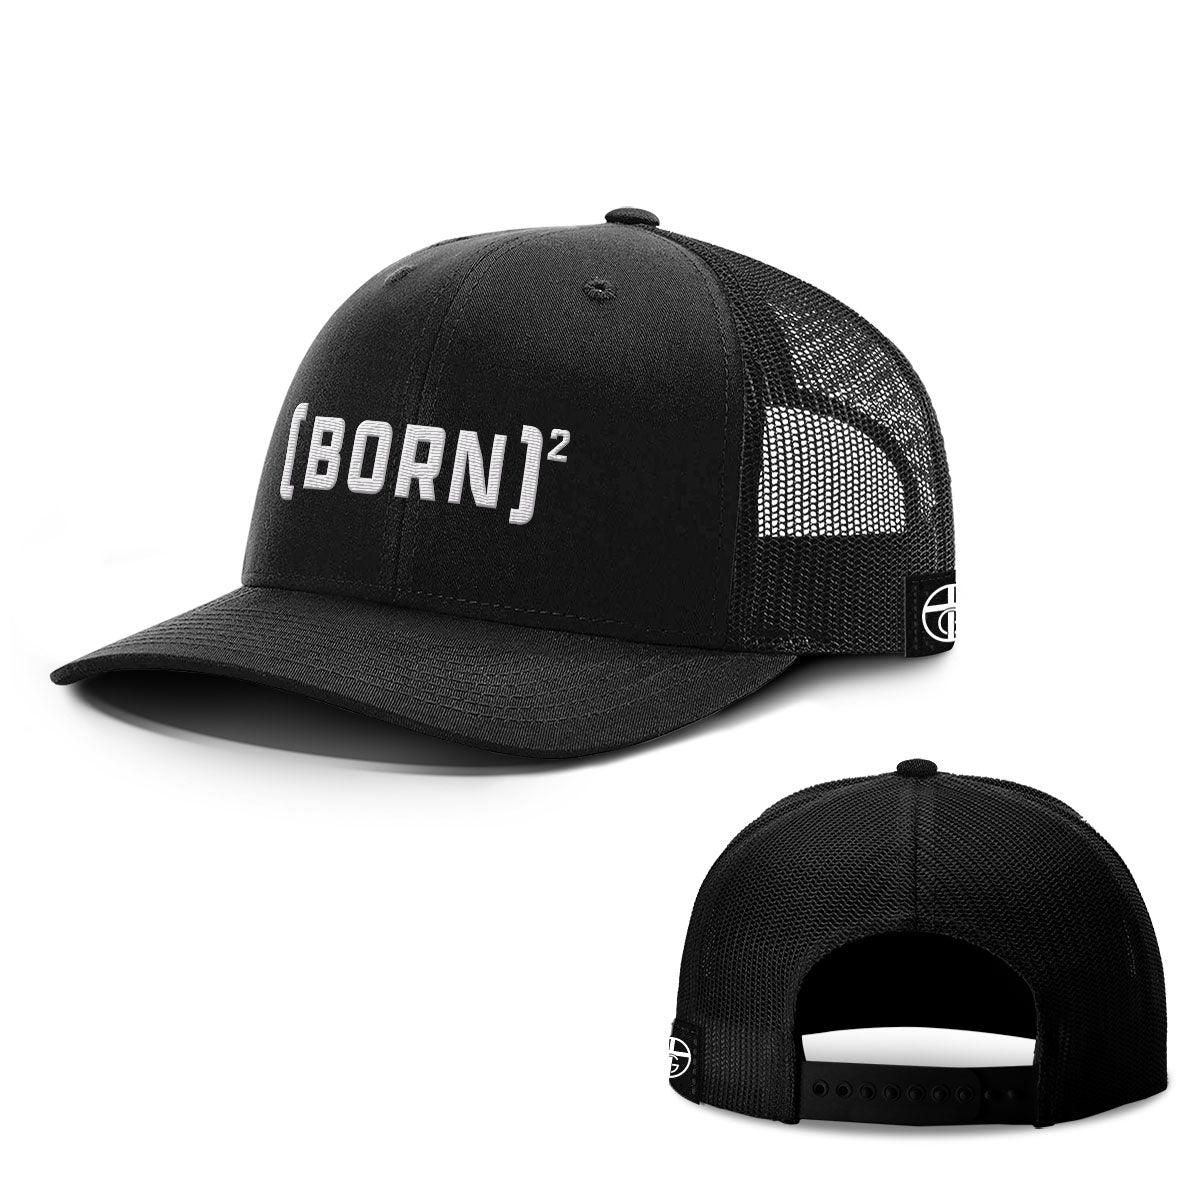 Born Again Hats